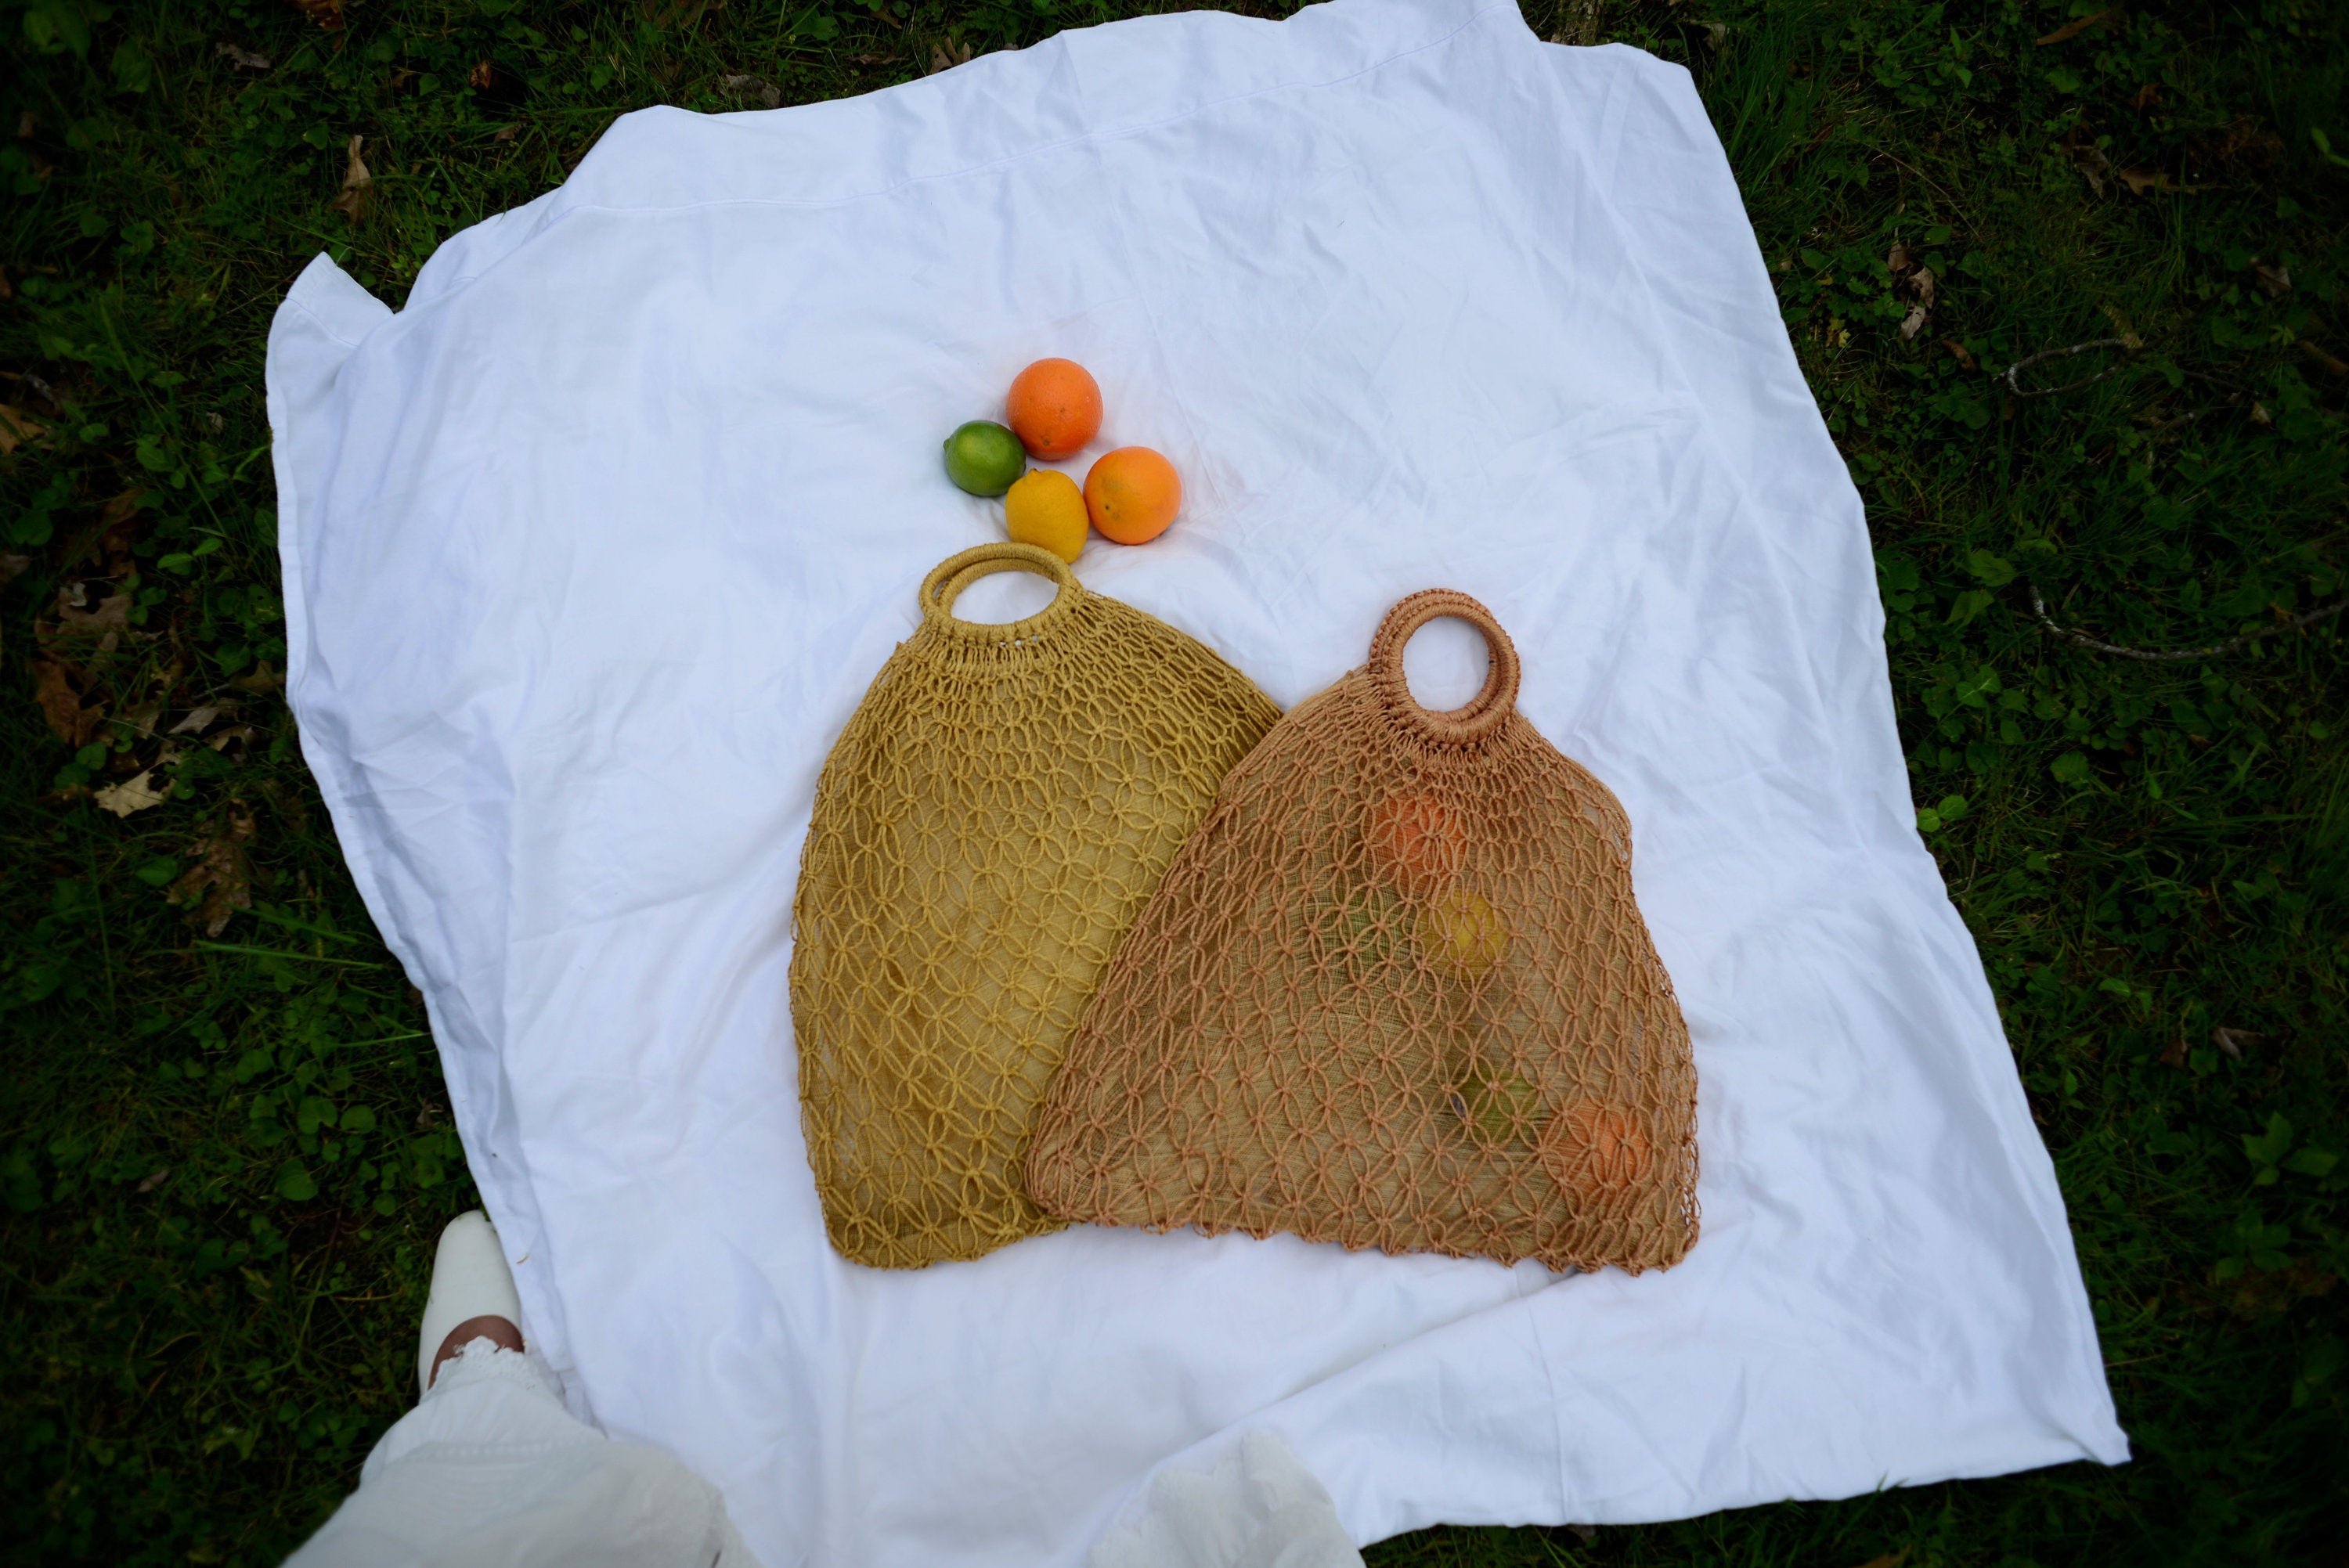 1950s Philippine hand woven hemp market bags, never used